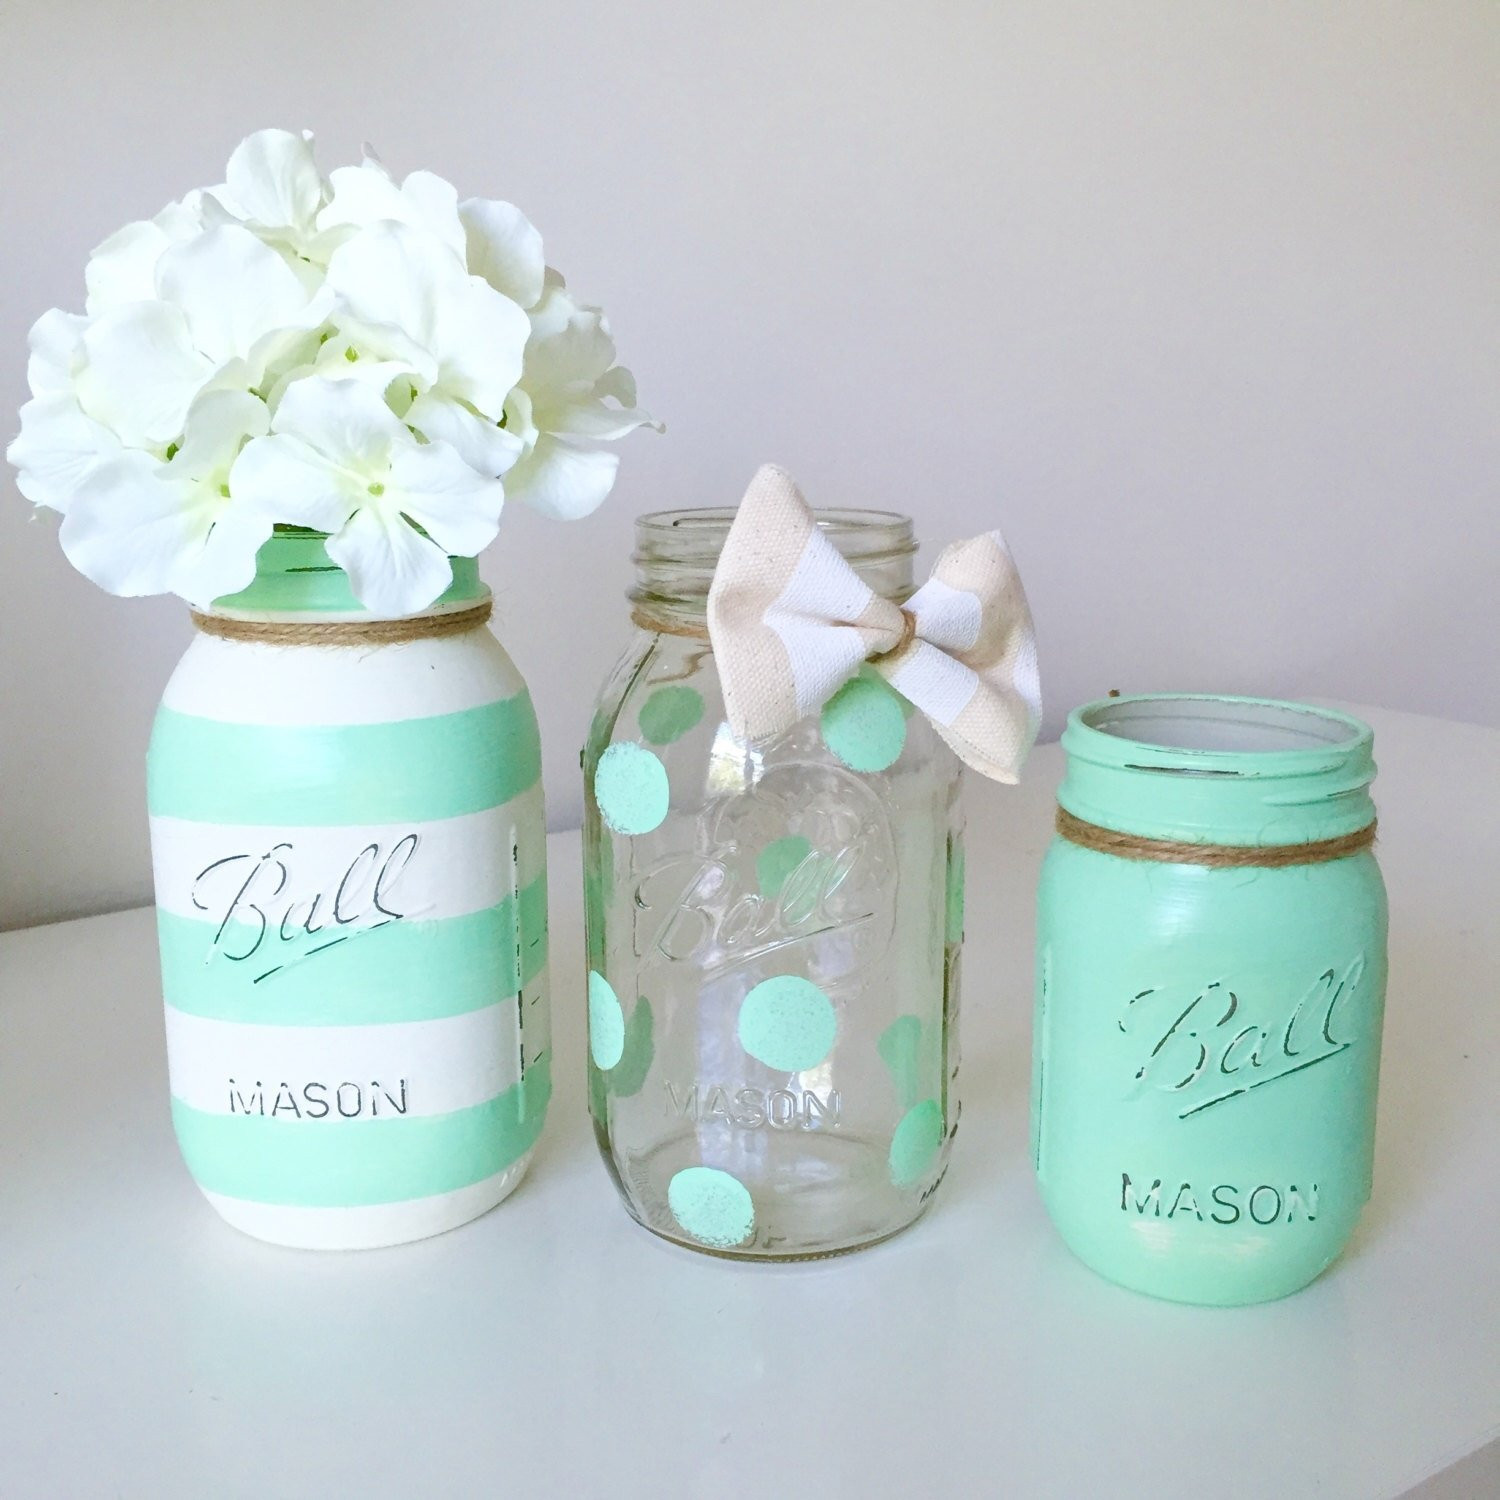 Mason Jar Gift Ideas For Baby Shower
 10 Lovable Mason Jar Ideas For Baby Shower 2020